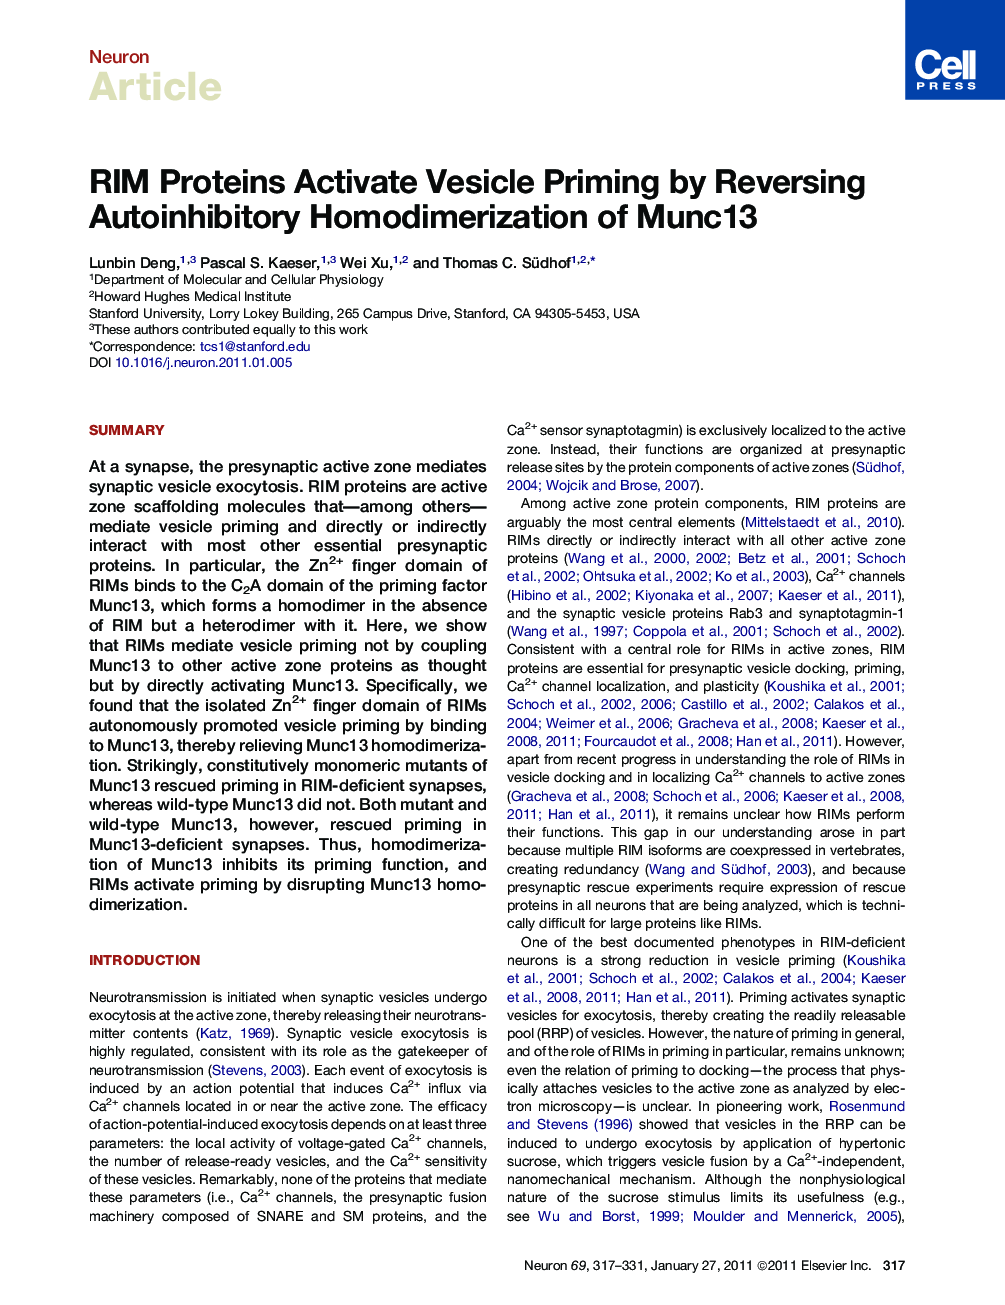 RIM Proteins Activate Vesicle Priming by Reversing Autoinhibitory Homodimerization of Munc13